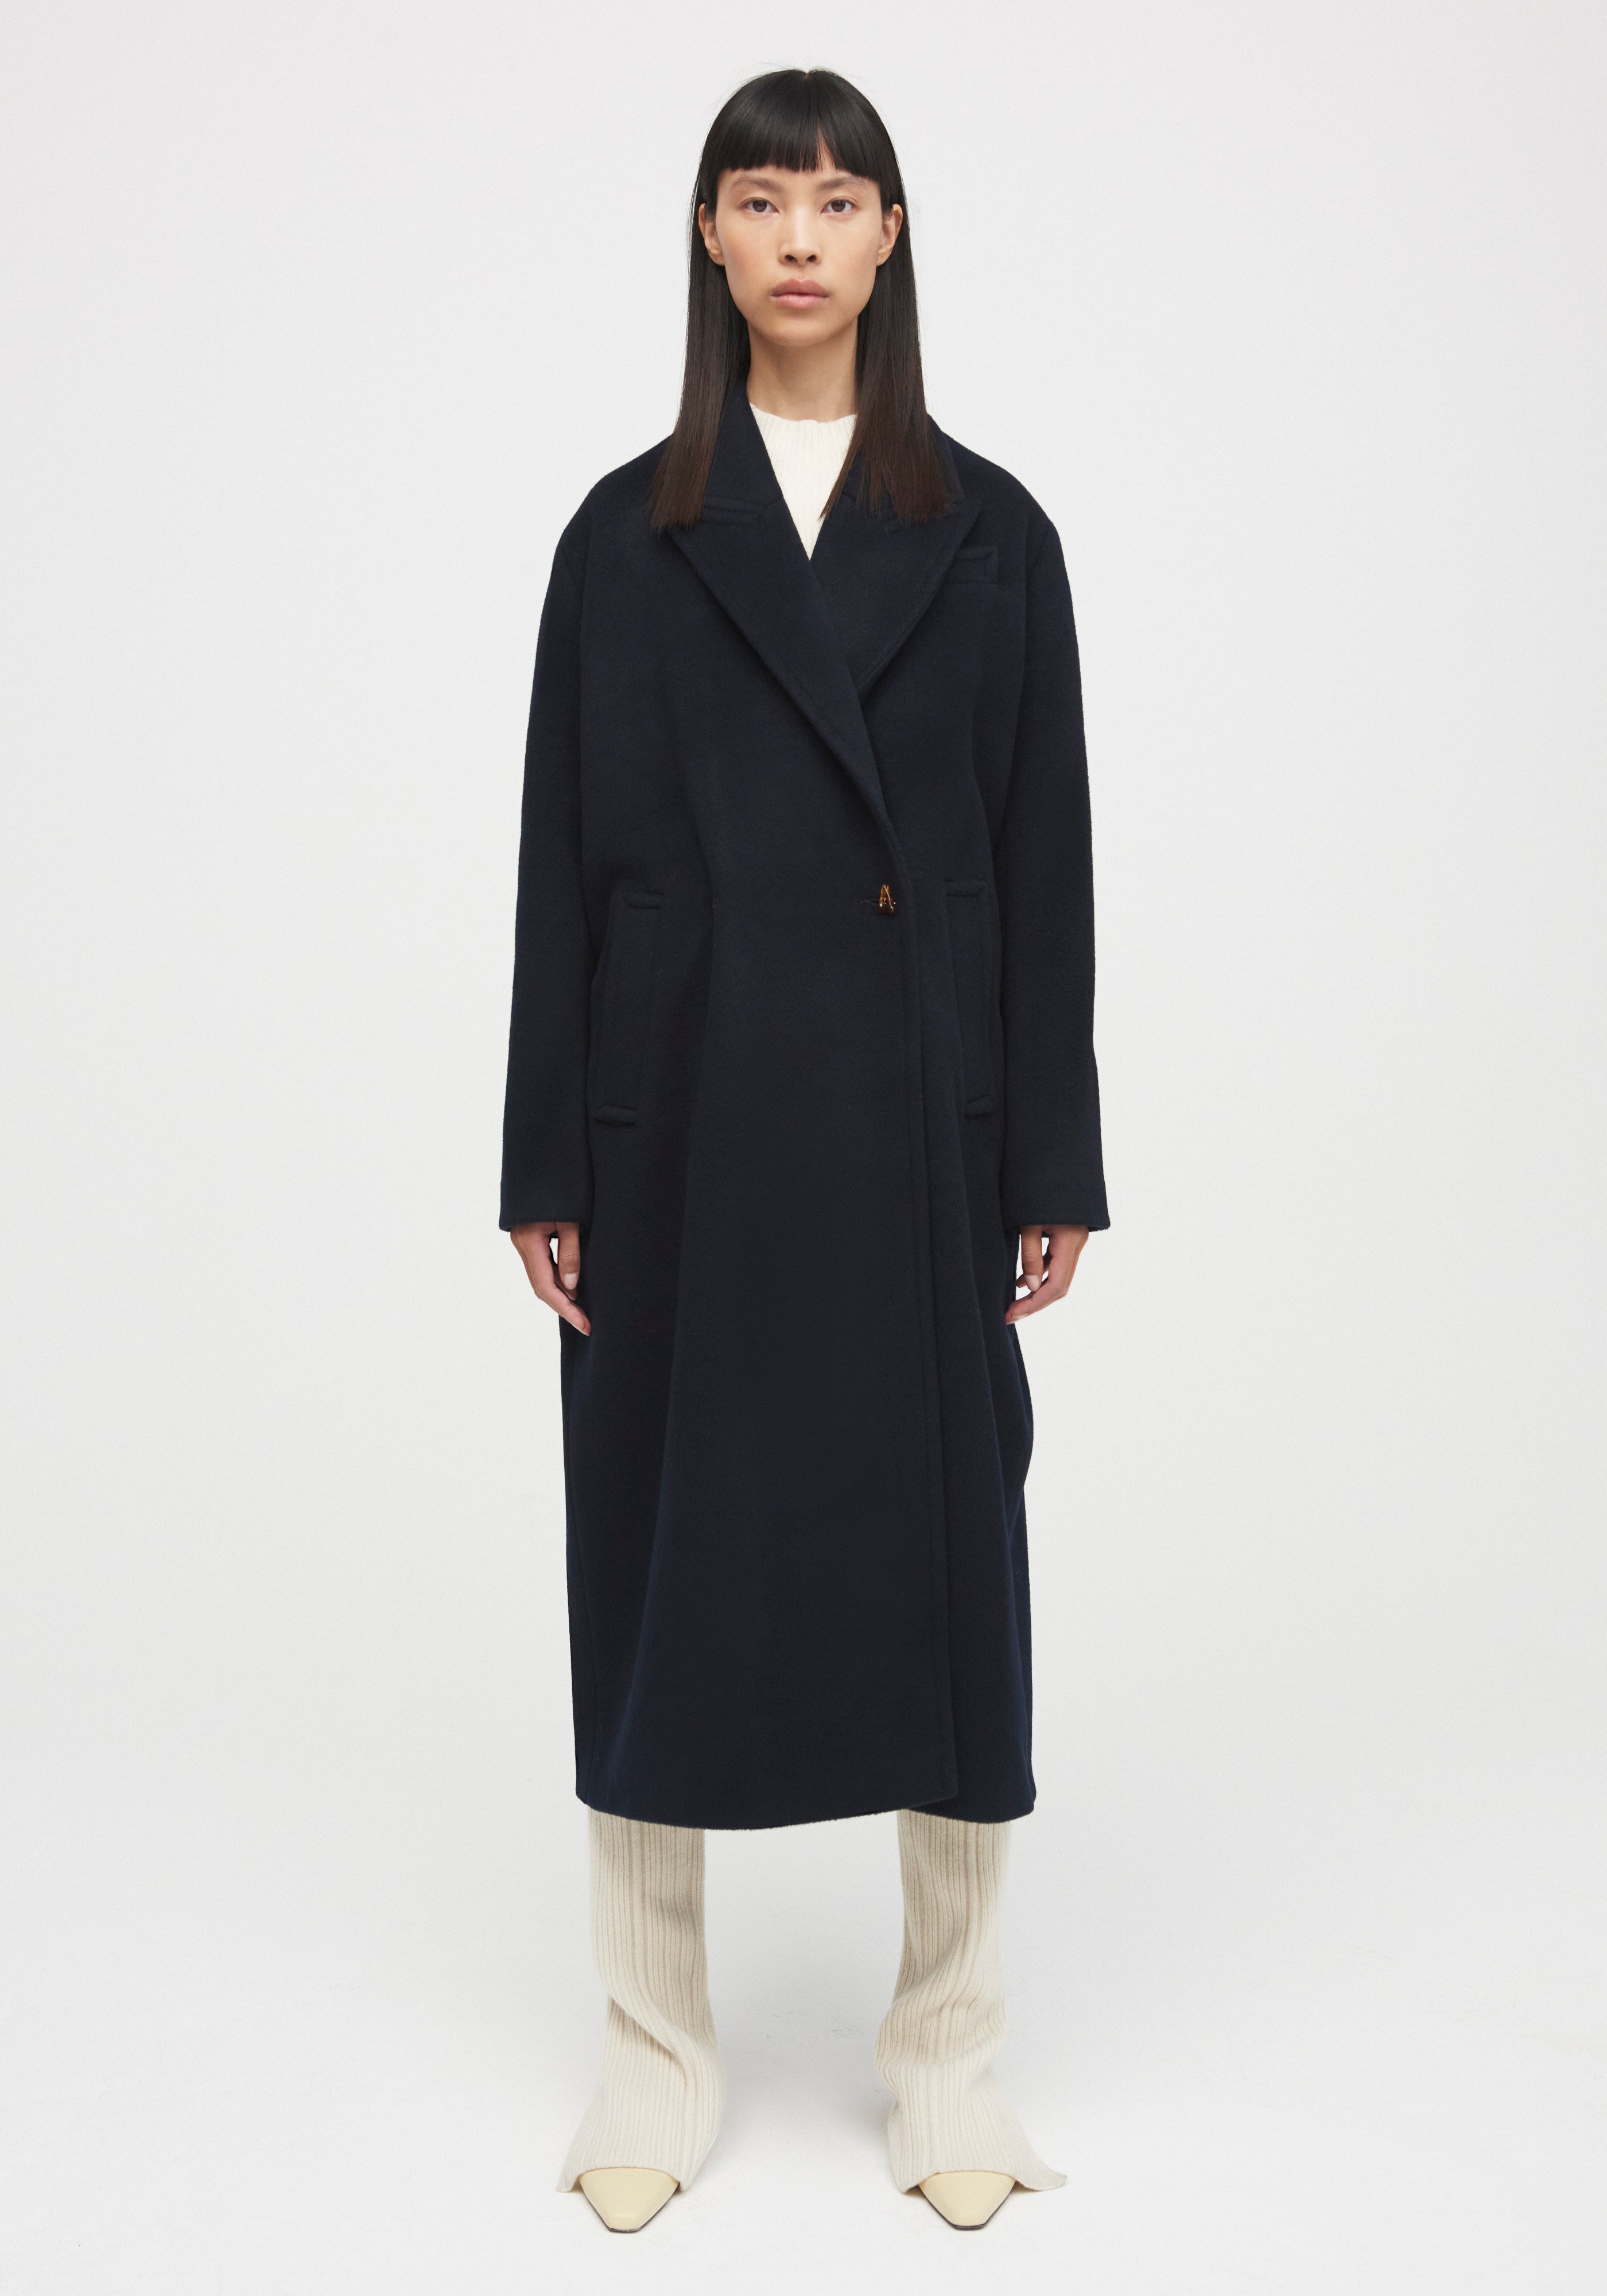 RANDEBOO】Basic wool long coat black max-bauprojekt.de